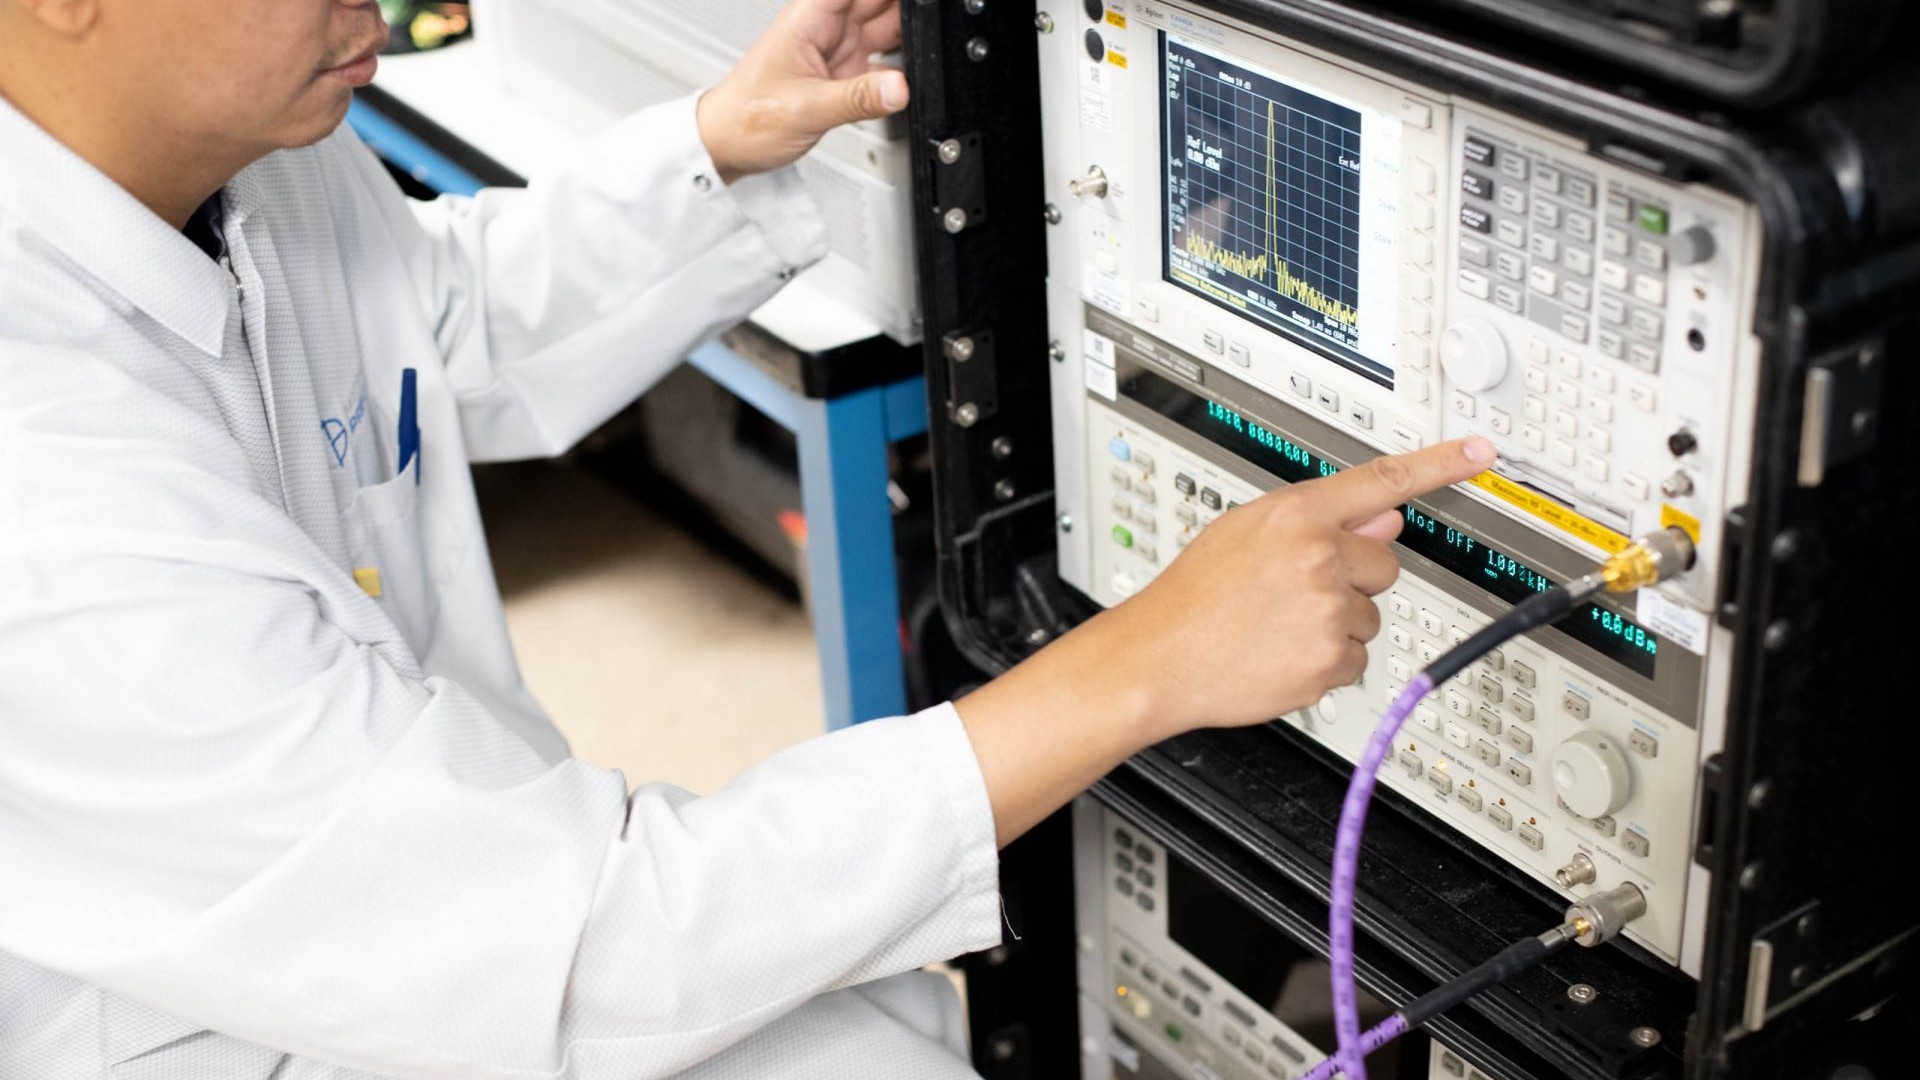 Lab technician using RF & Microwave calibration equipment